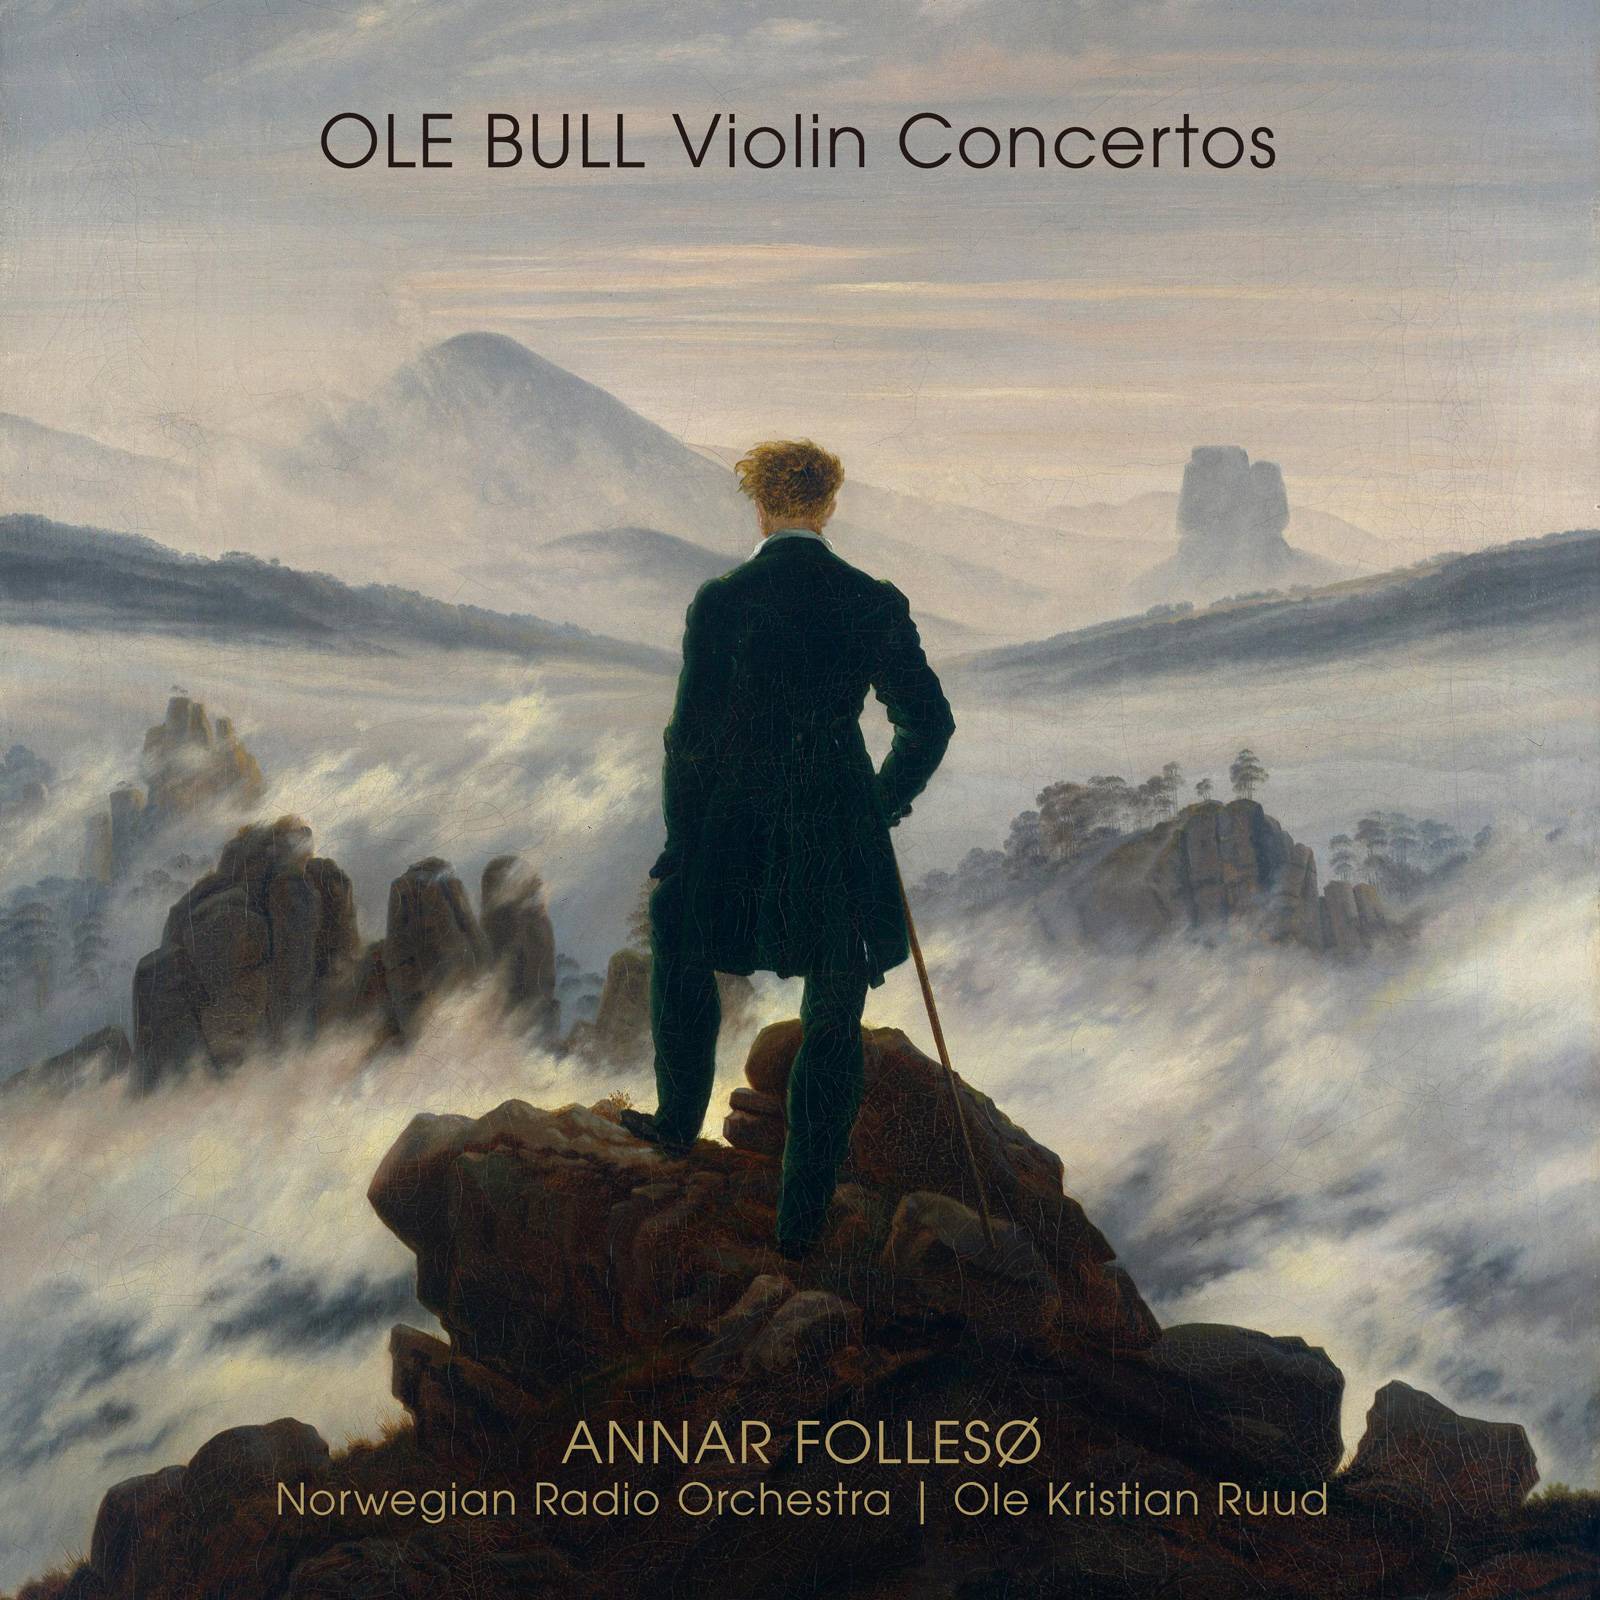 Annar Folleso, Norwegian Radio Orchestra, Ole Kristian Ruud – Ole Bull: Violin Concertos (2010) MCH SACD ISO + Hi-Res FLAC